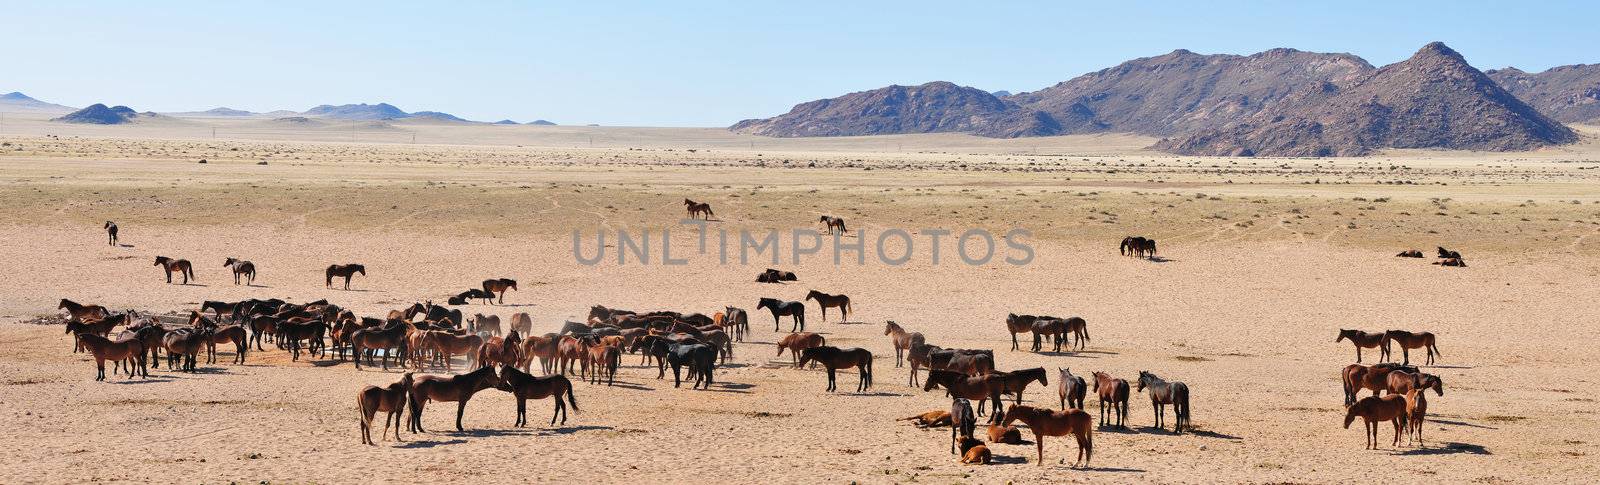 Wild horses of the namib panorama by dpreezg